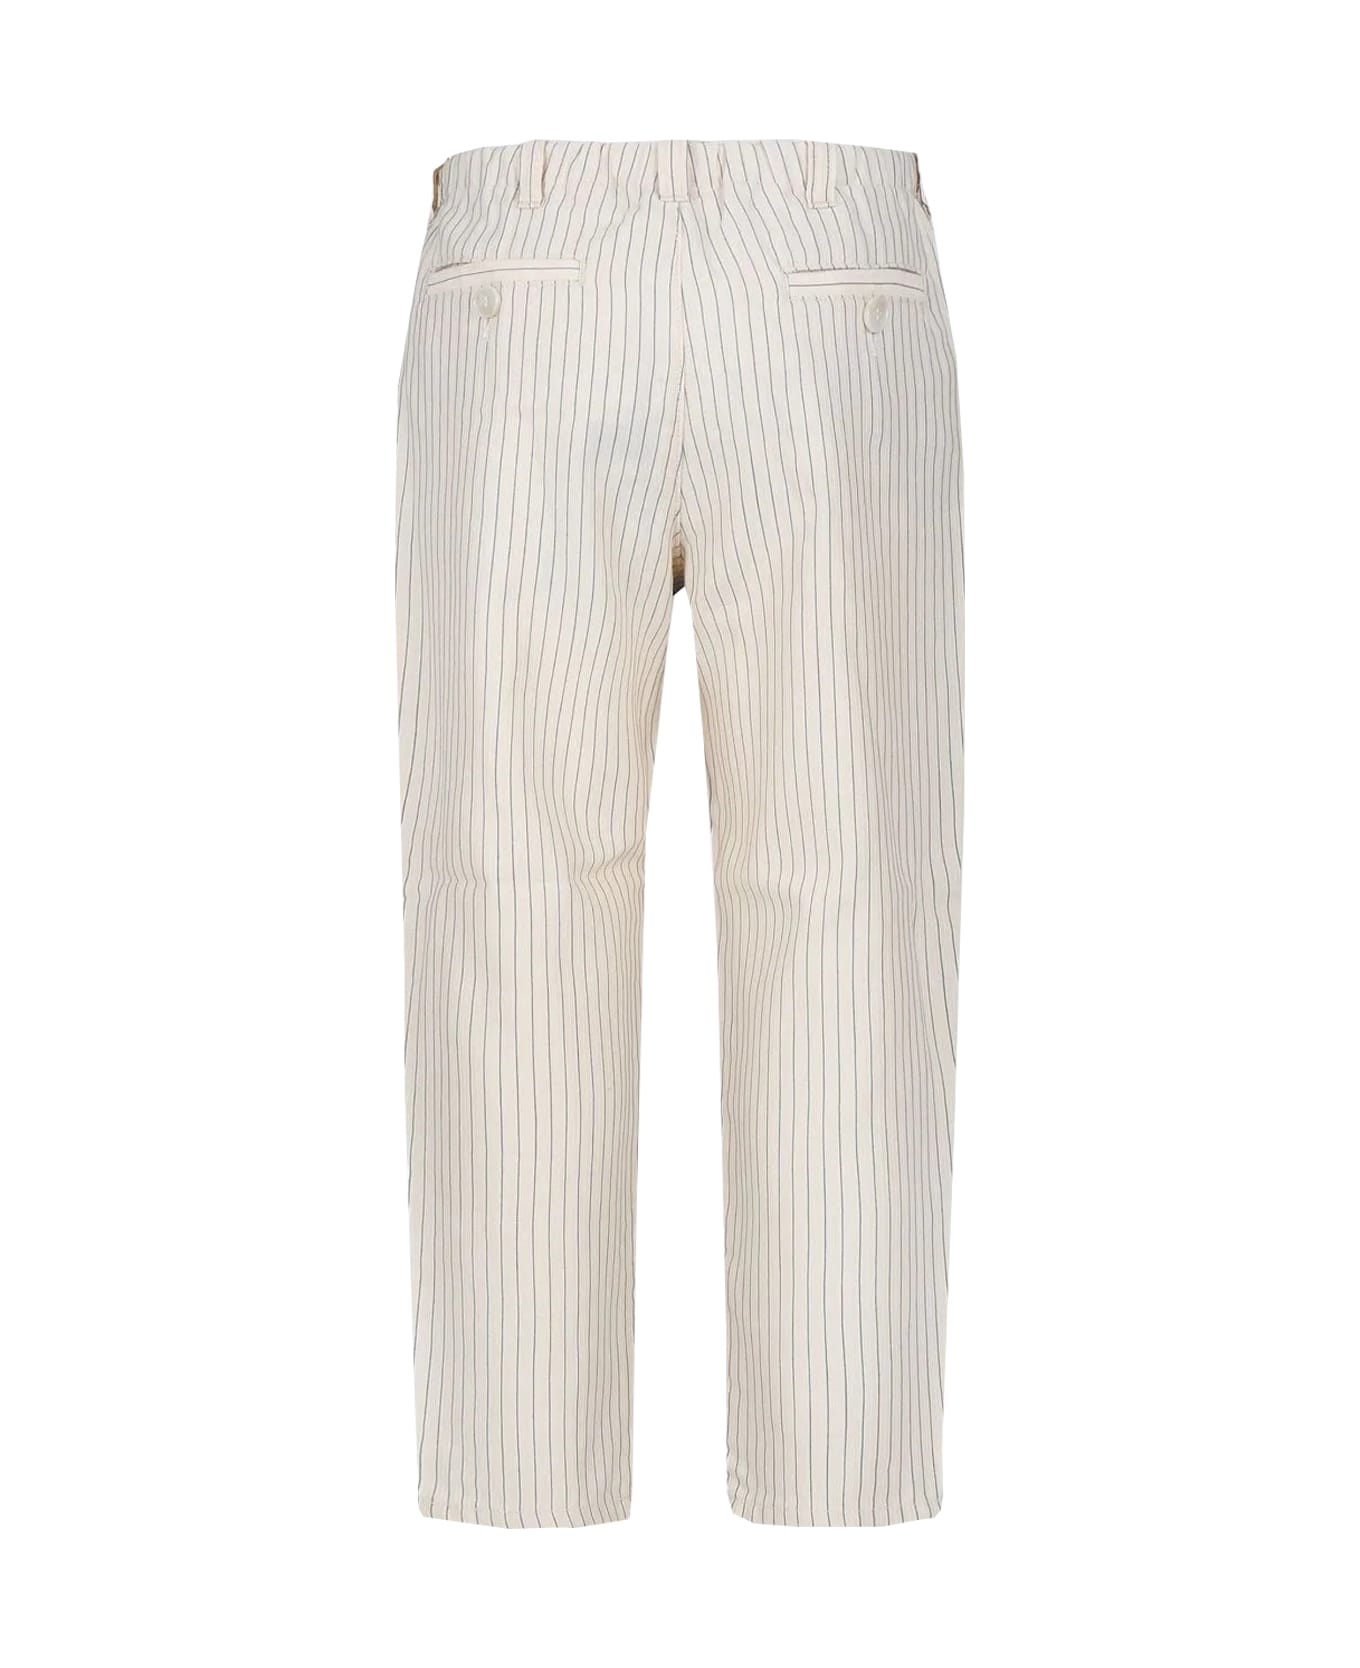 Emporio Armani Striped Pants - Beige